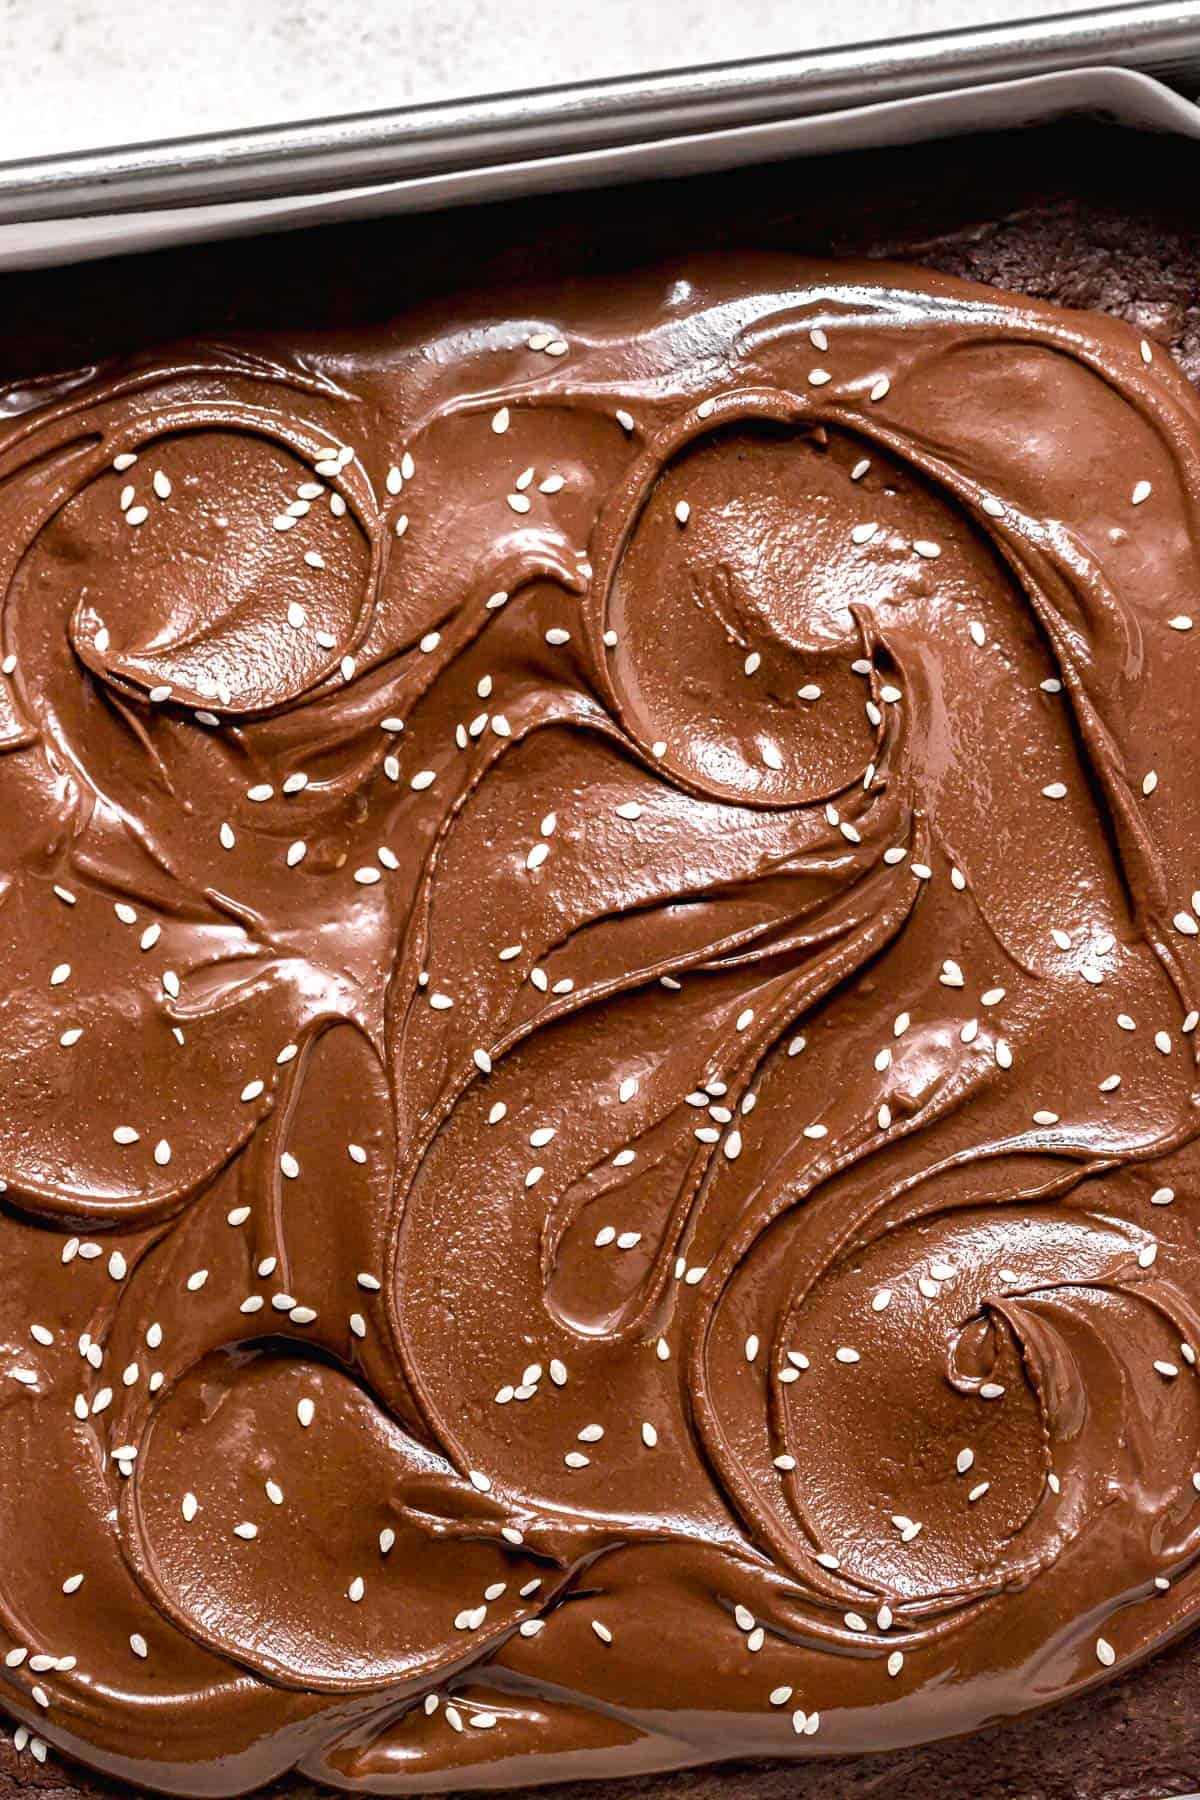 chocolate tahini frosting spread on brownies in square pan.